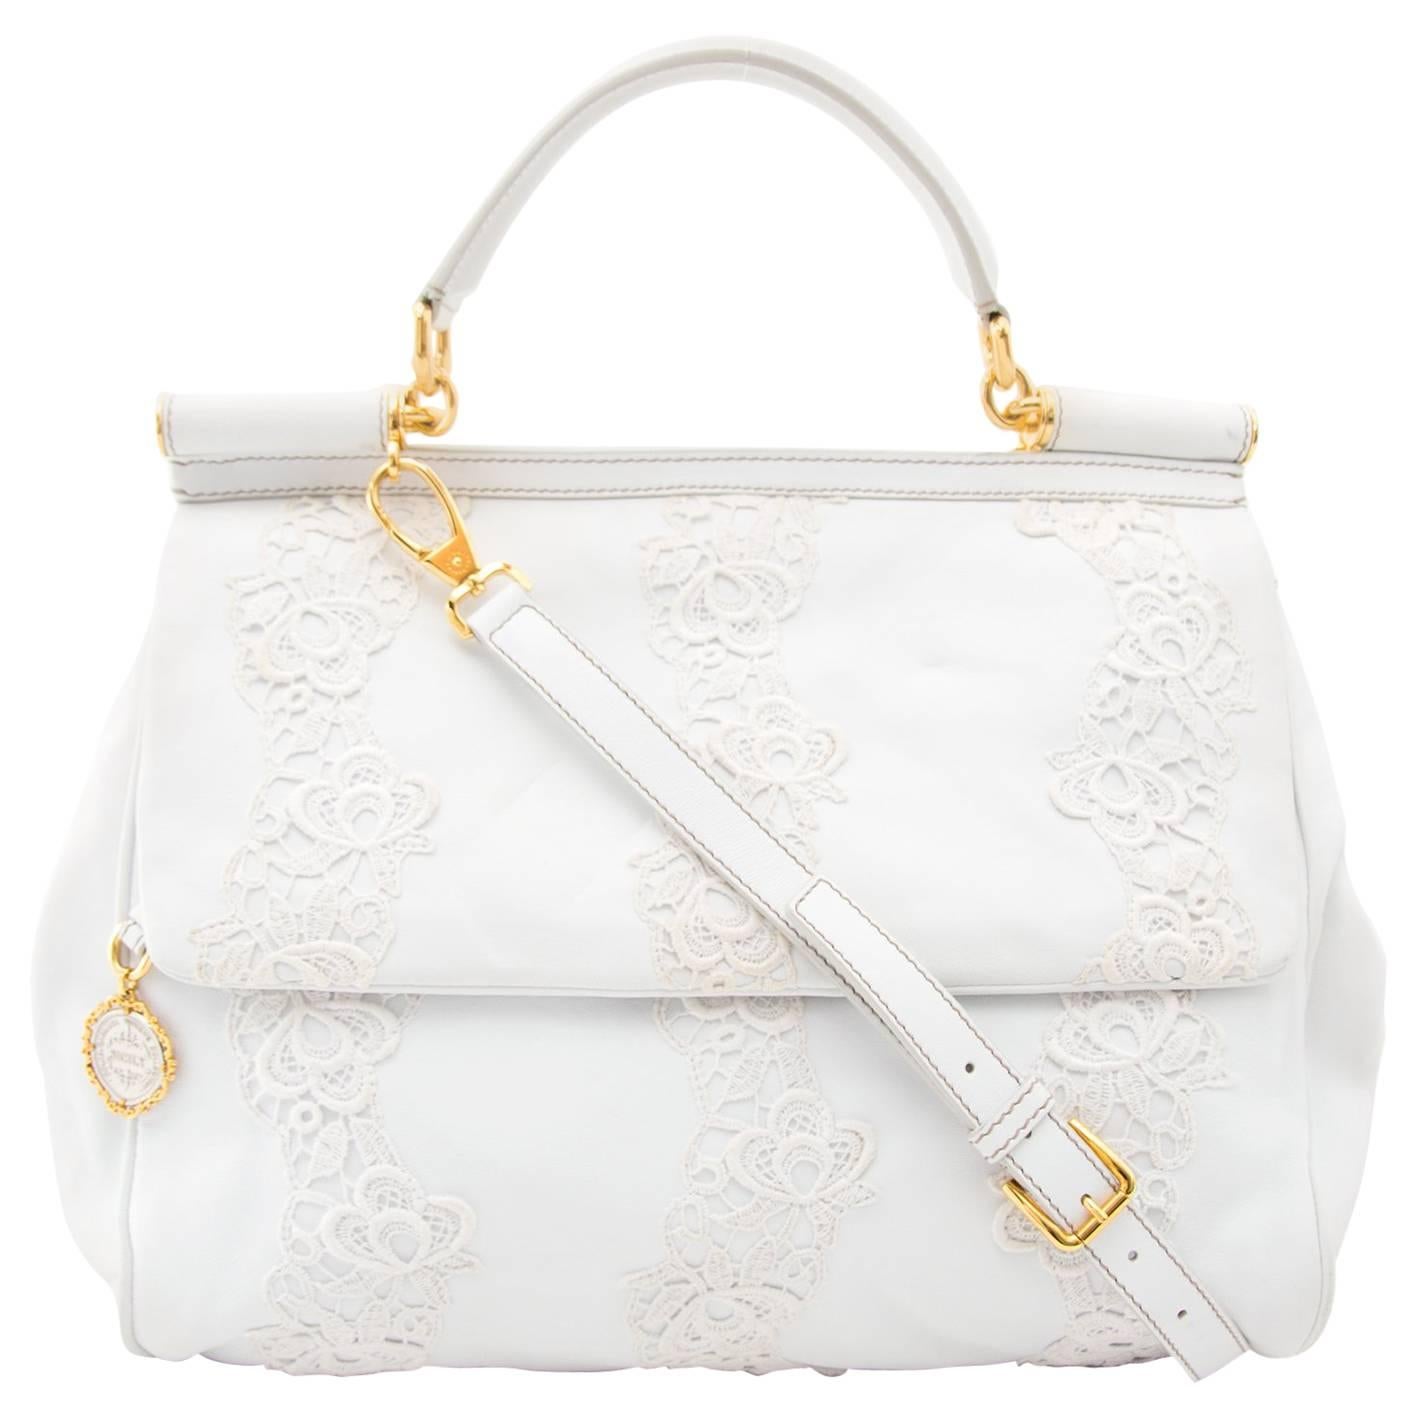 Dolce & Gabbana White Leather & Lace Sicily Bag